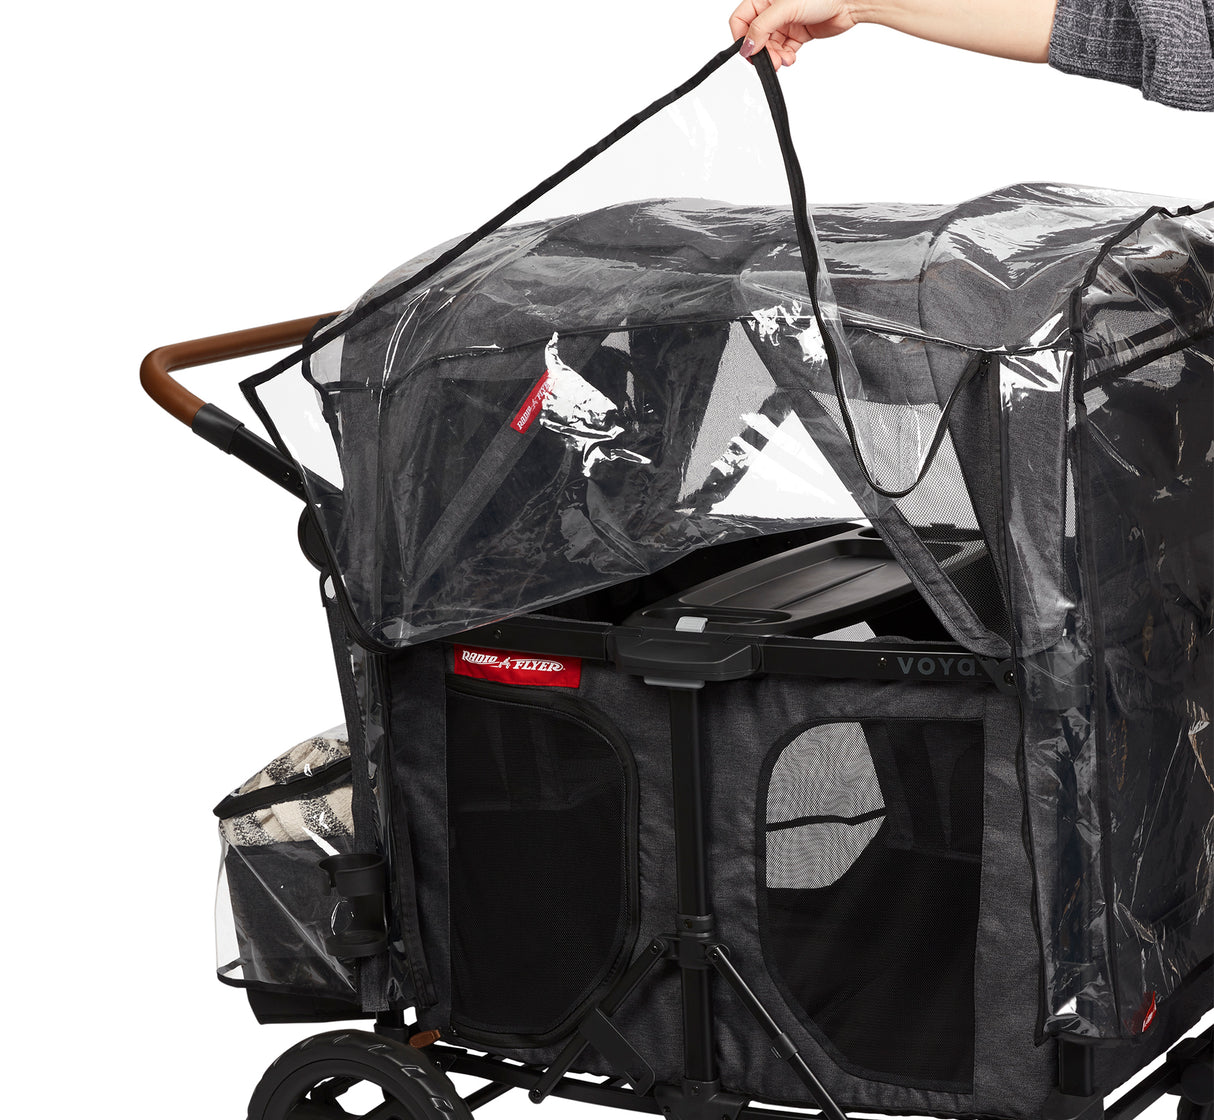 Rain Cover with Bag - Voya™ Stroller Wagon